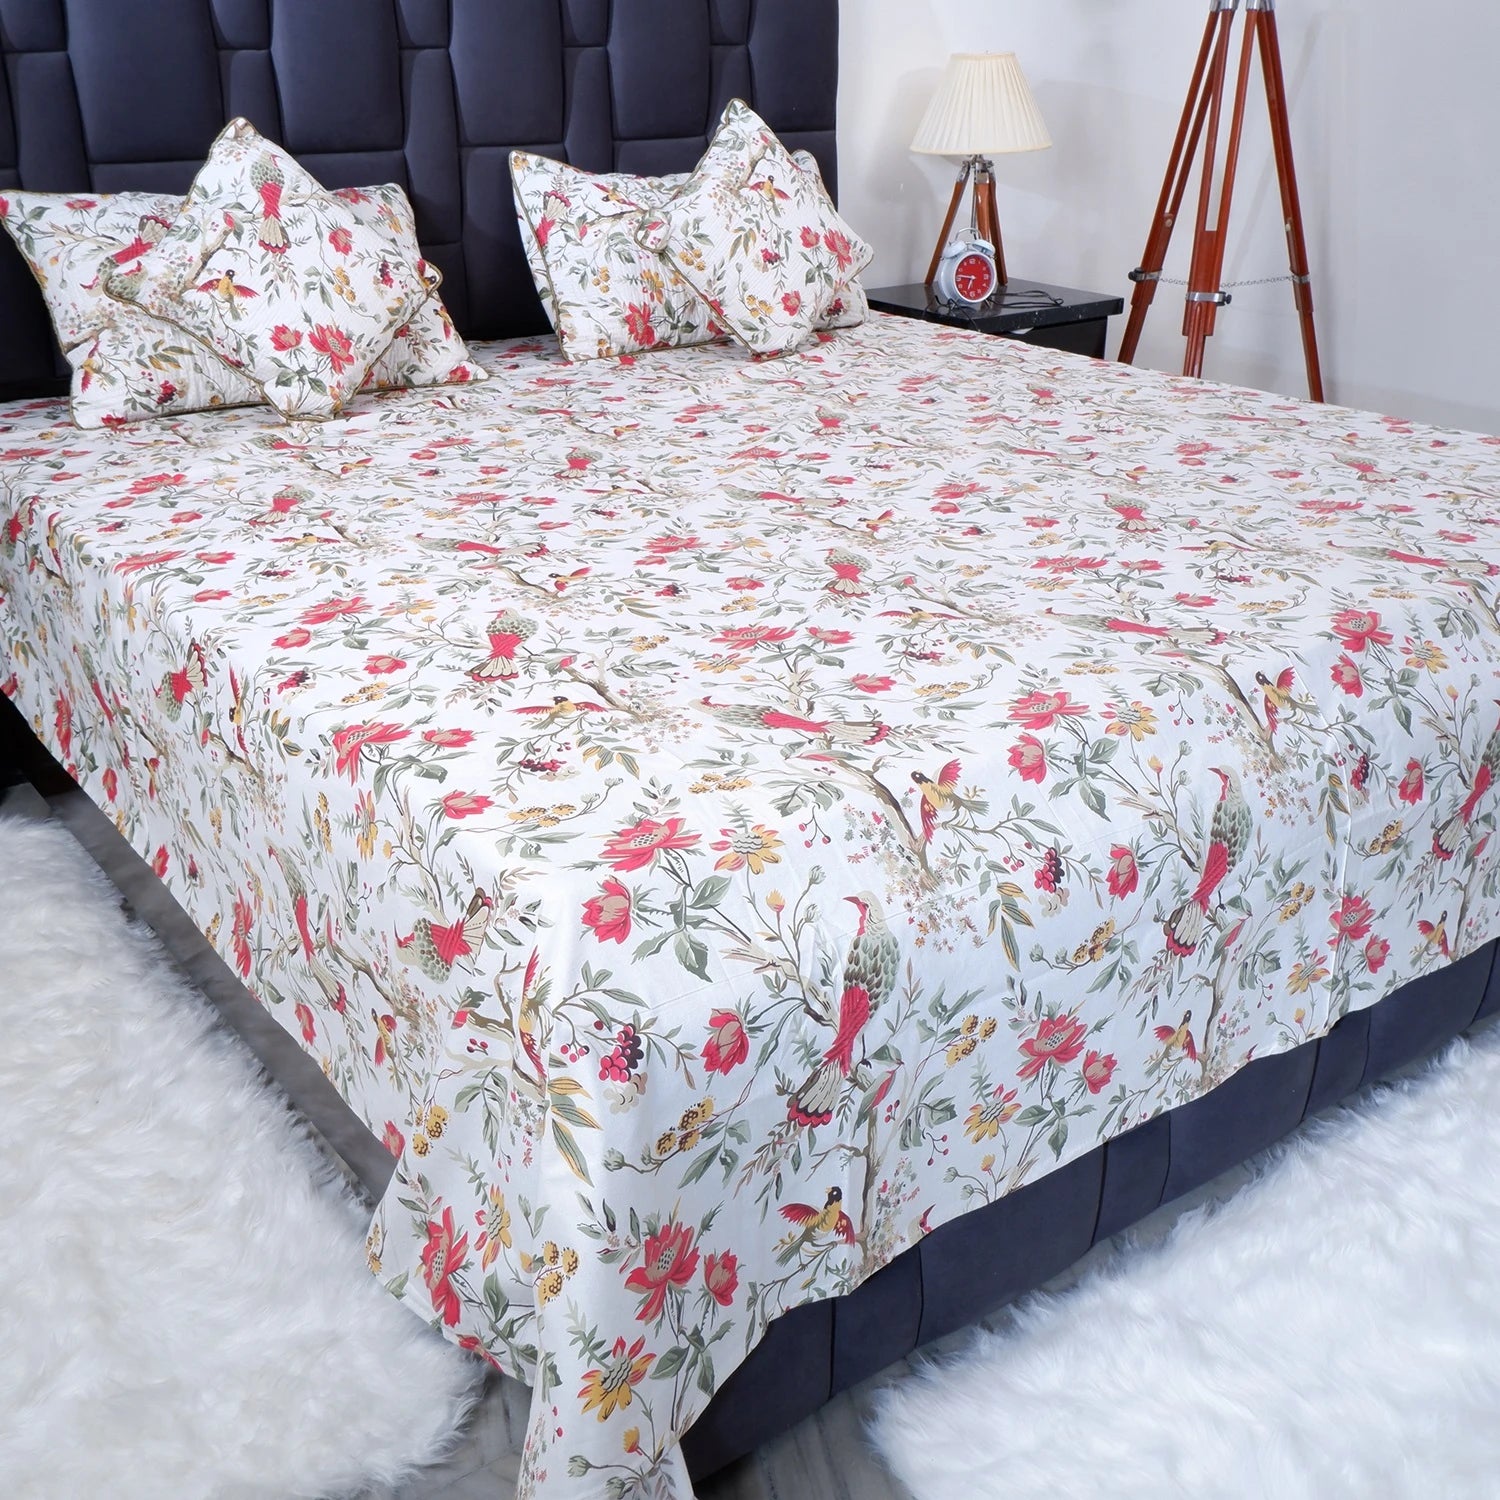 100% Pure Cotton Bed Sheet | Cotton Garden Bliss